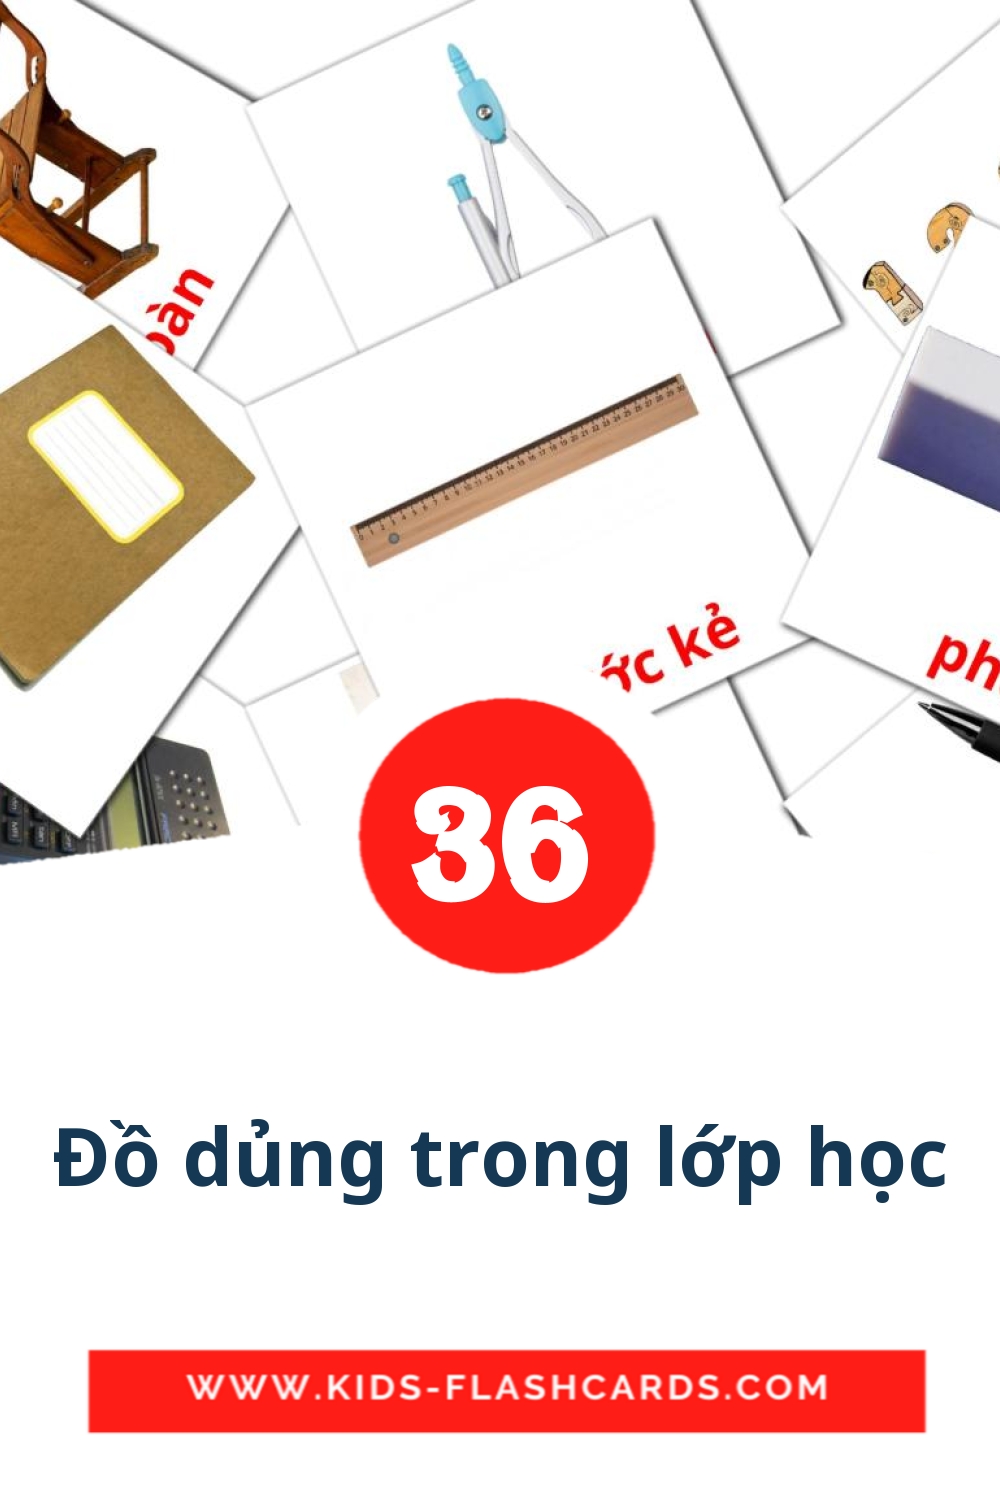 36 tarjetas didacticas de Đồ dủng trong lớp học para el jardín de infancia en vietnamita